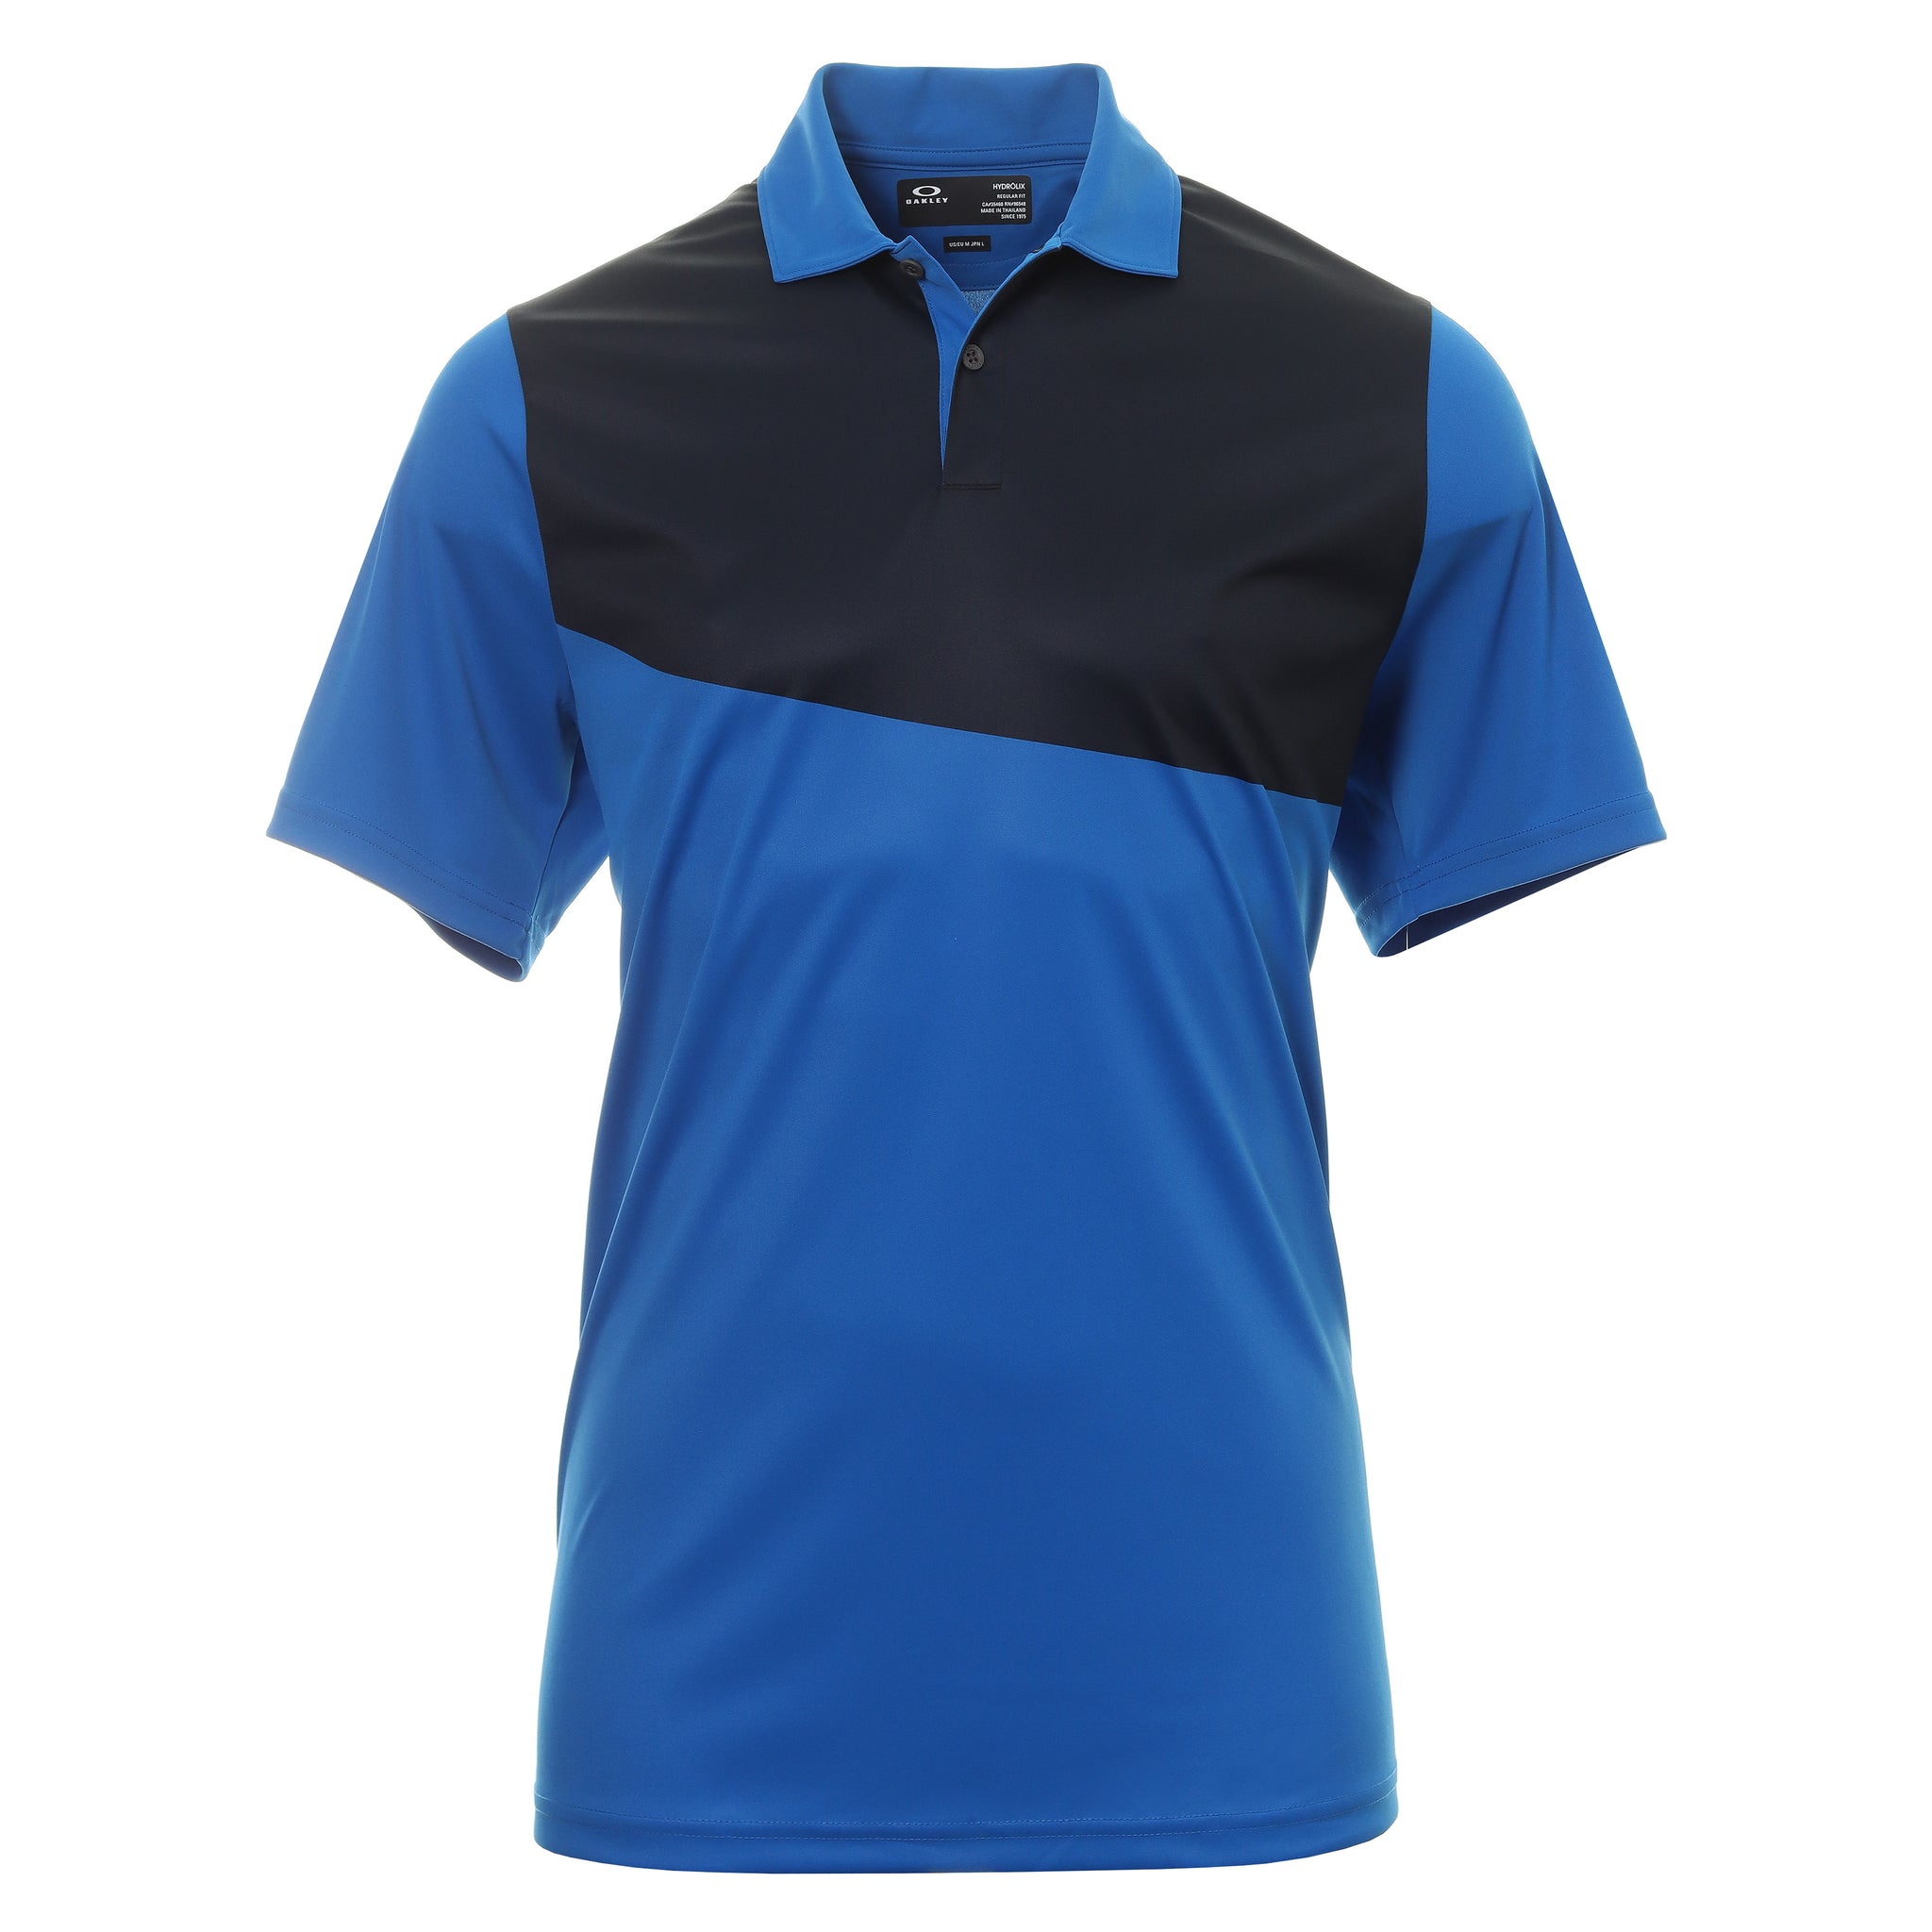 oakley-golf-divisional-colour-block-shirt-403085-62t-ozone